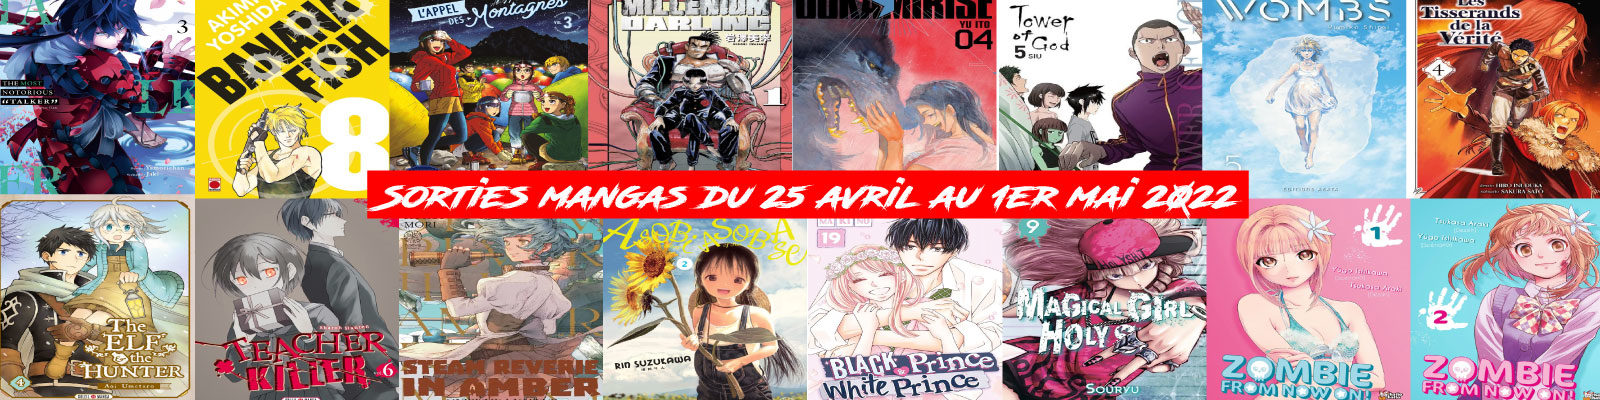 Sorties mangas-du-25-avril-au-1er-mai-2022